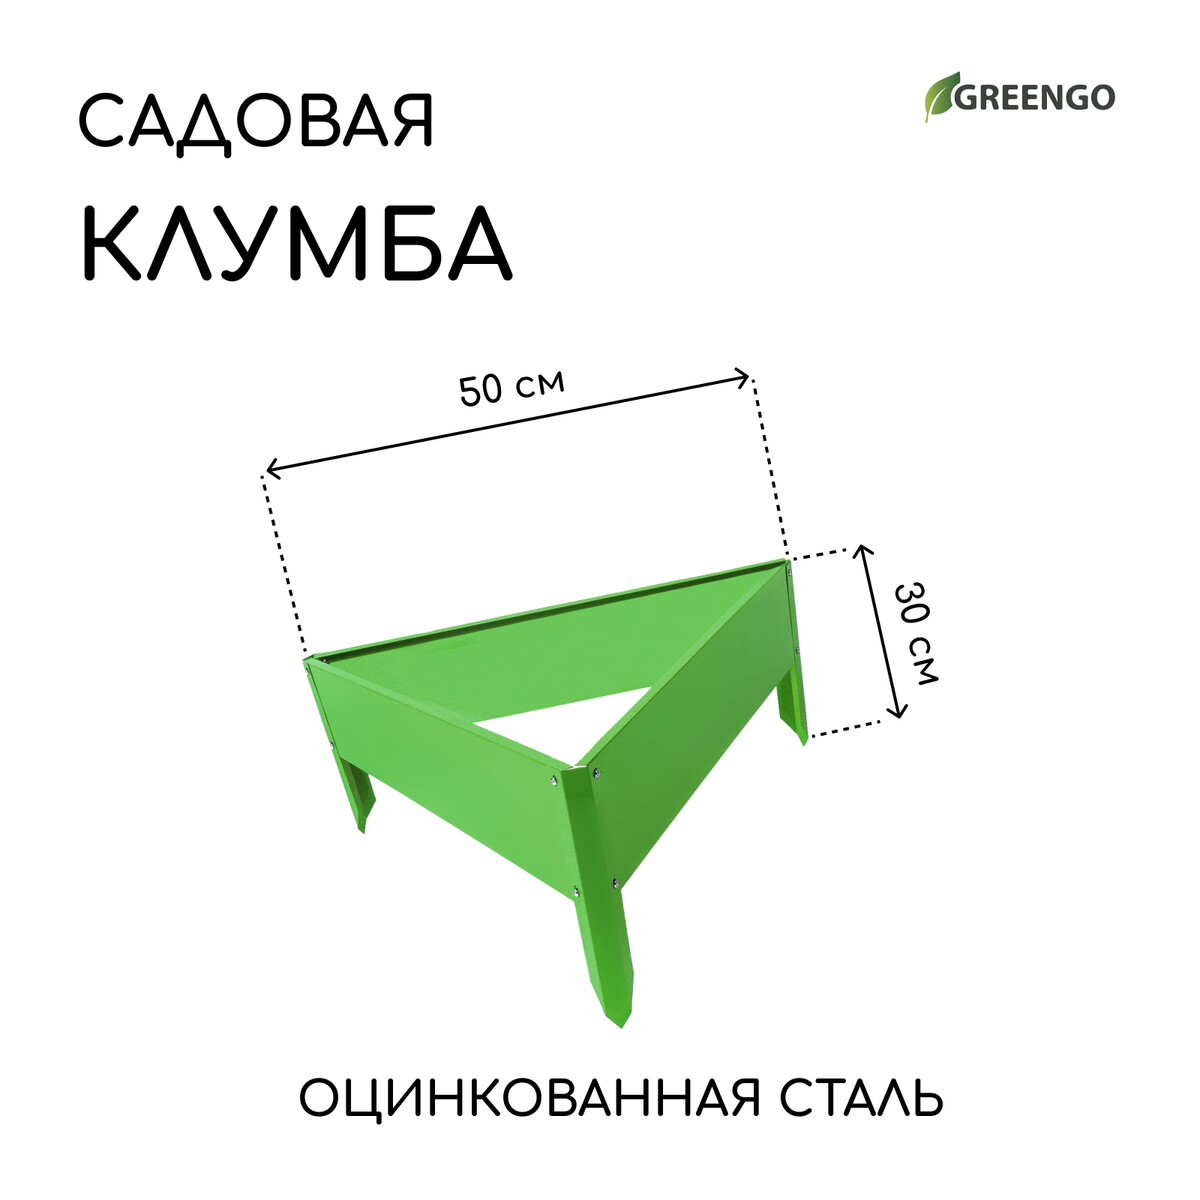 Клумба оцинкованная, 50 × 15 см, ярко-зеленая, Greengo